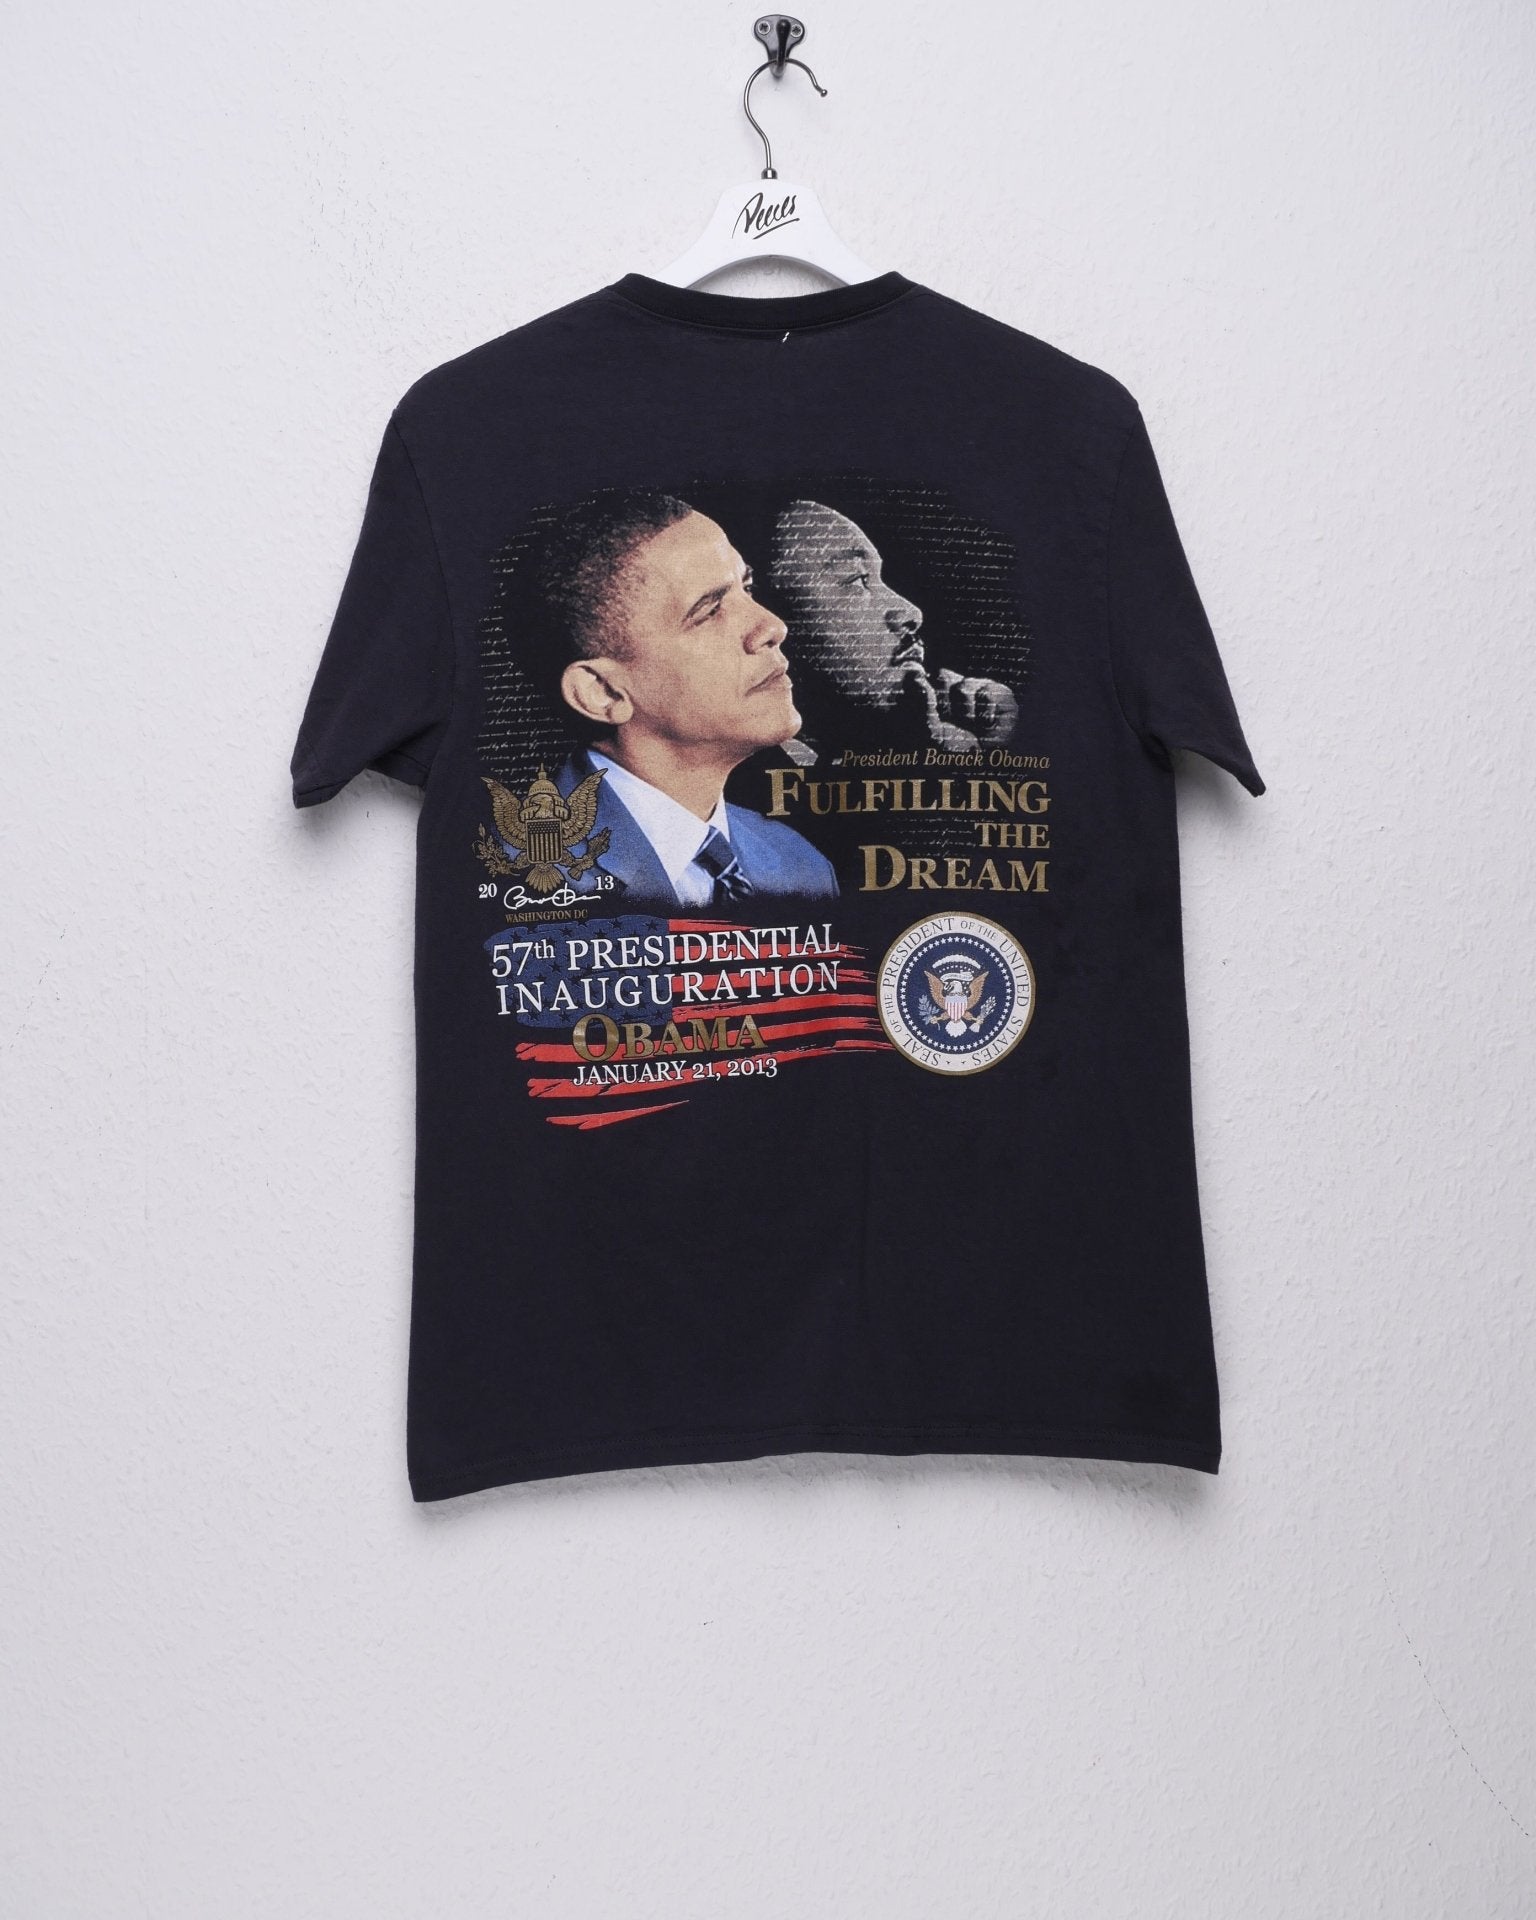 Barack Obama 2013 printed black Shirt - Peeces